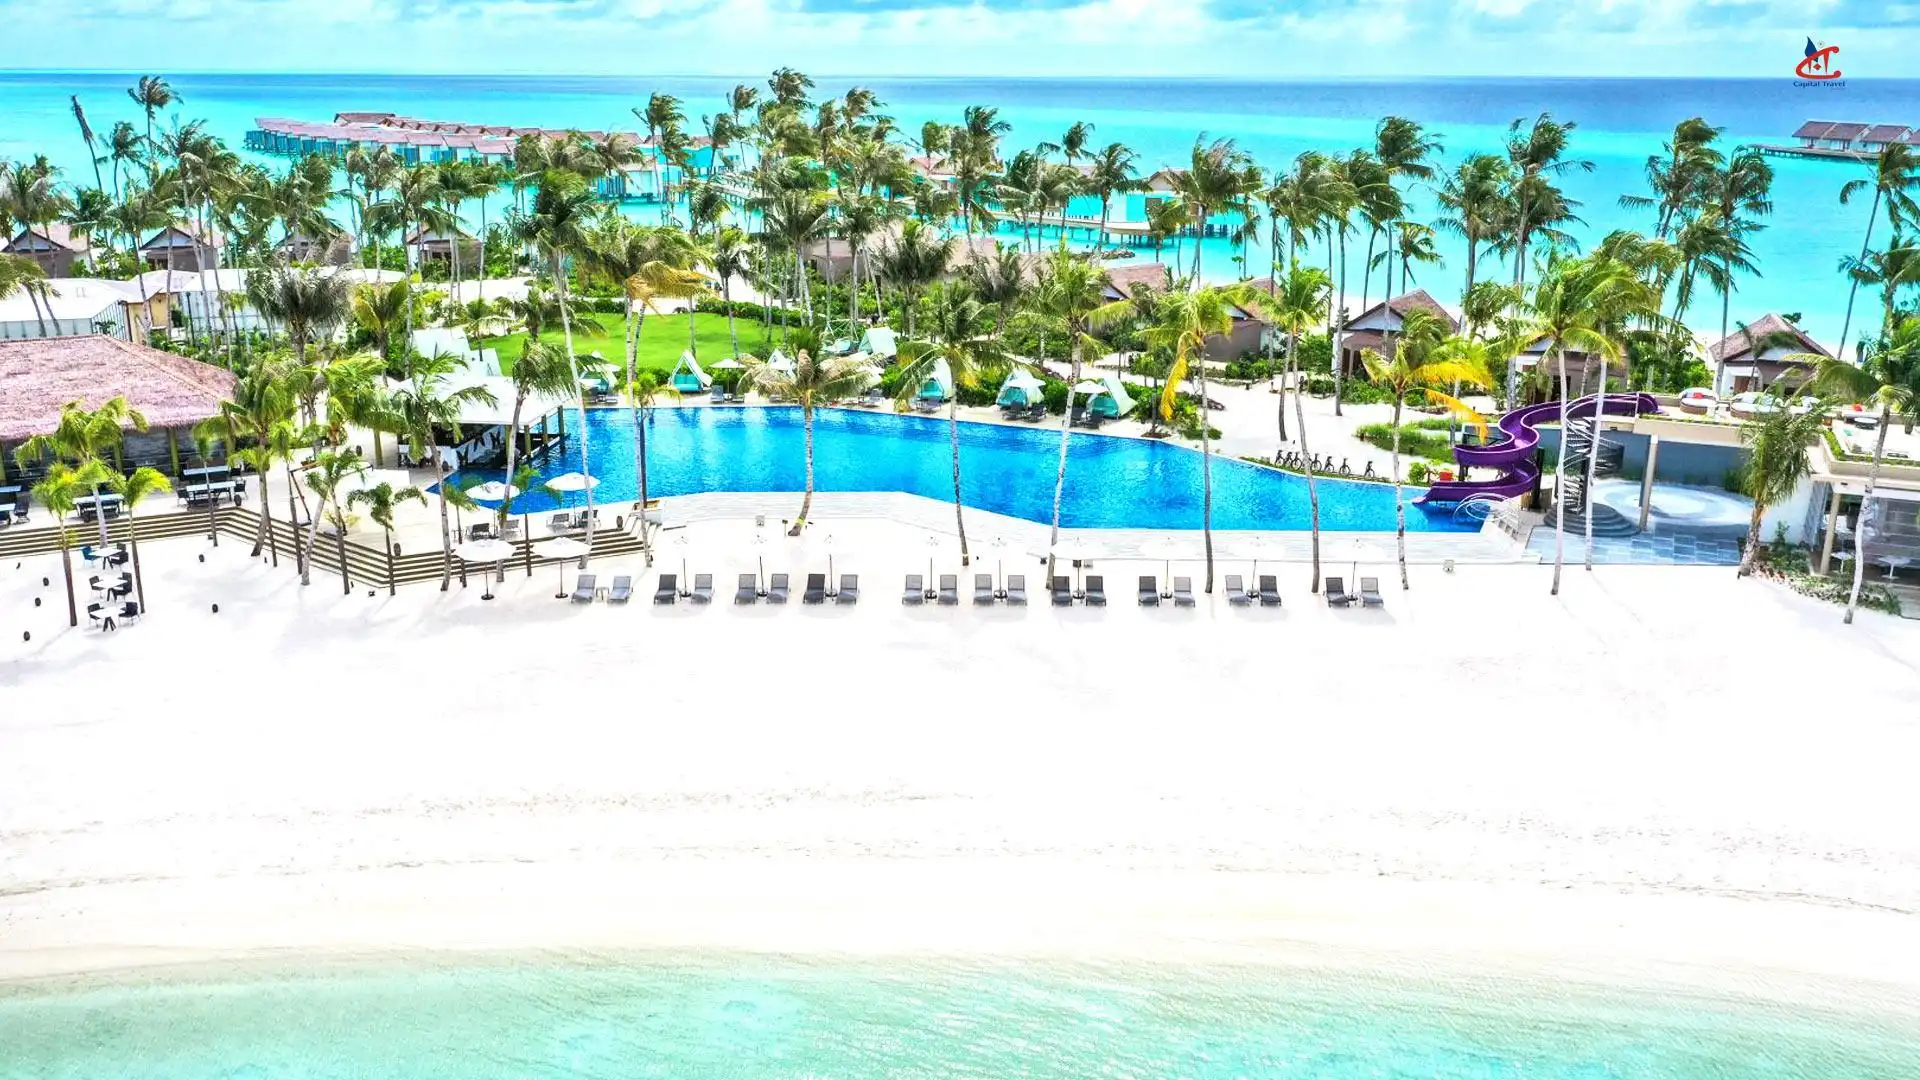 Hard Rock Hotel Maldives resort maldives pool